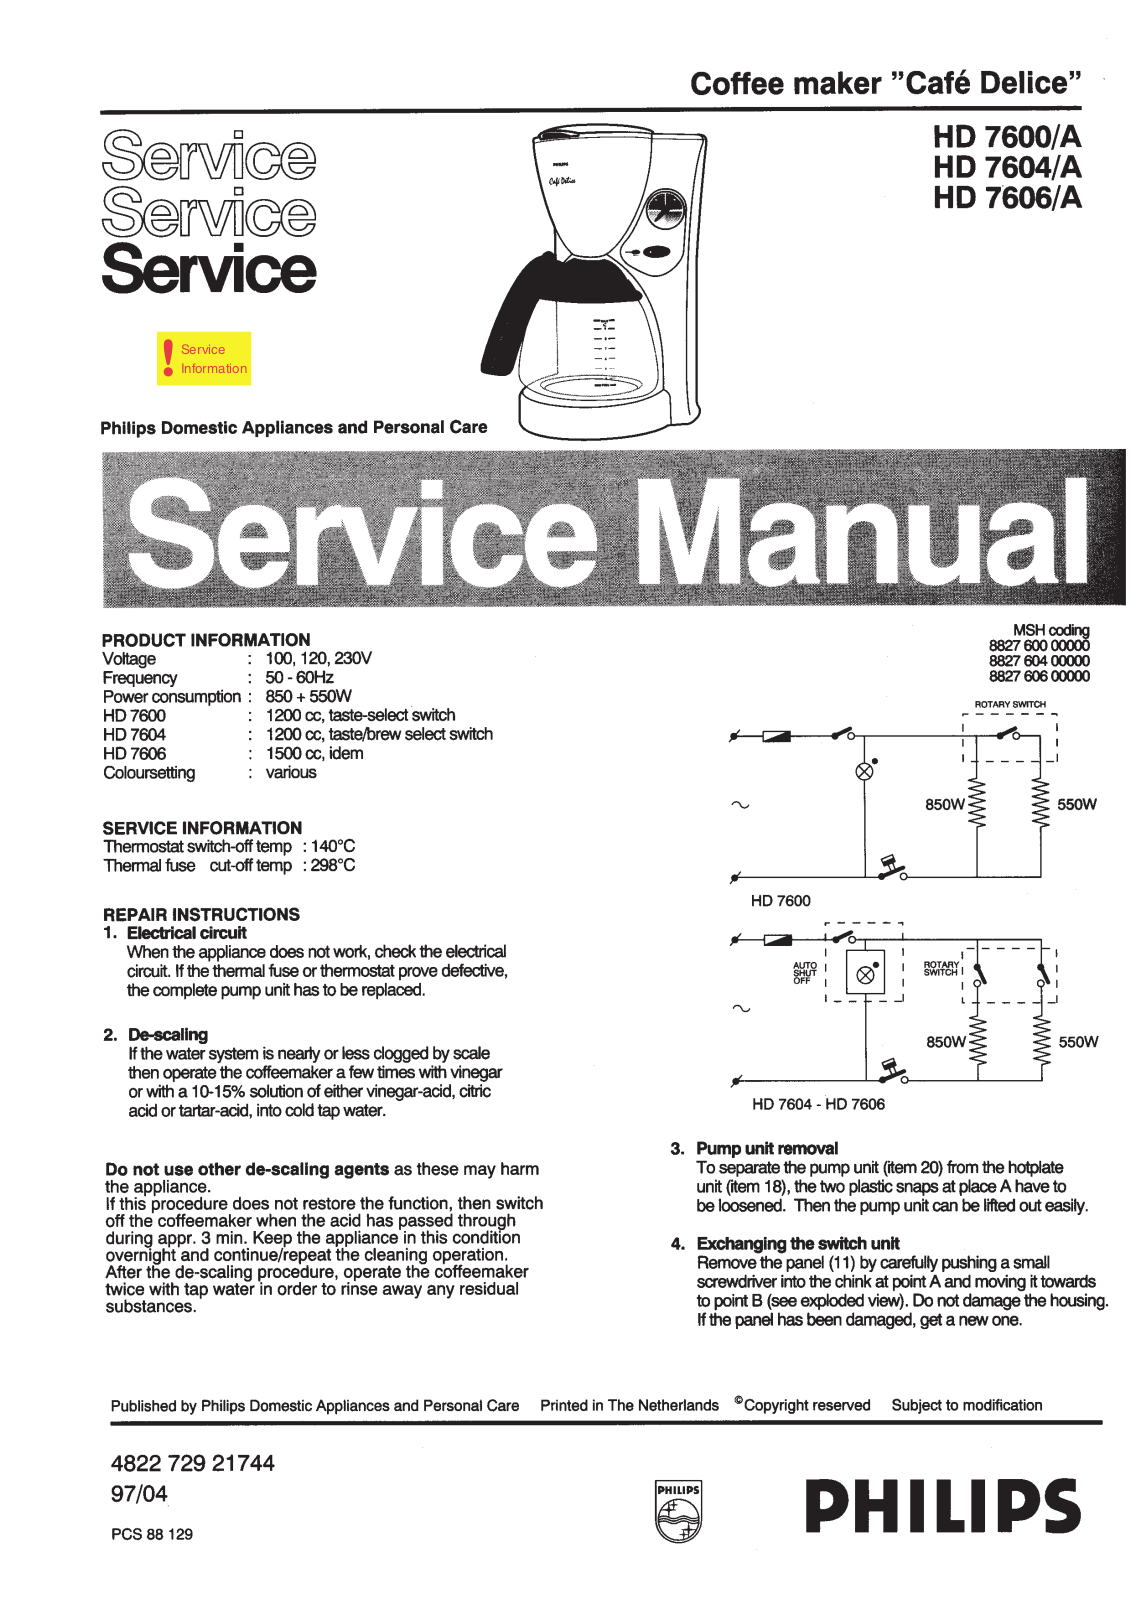 Philips HD 7606-A, HD 7604-A, HD 7600-A Service Manual